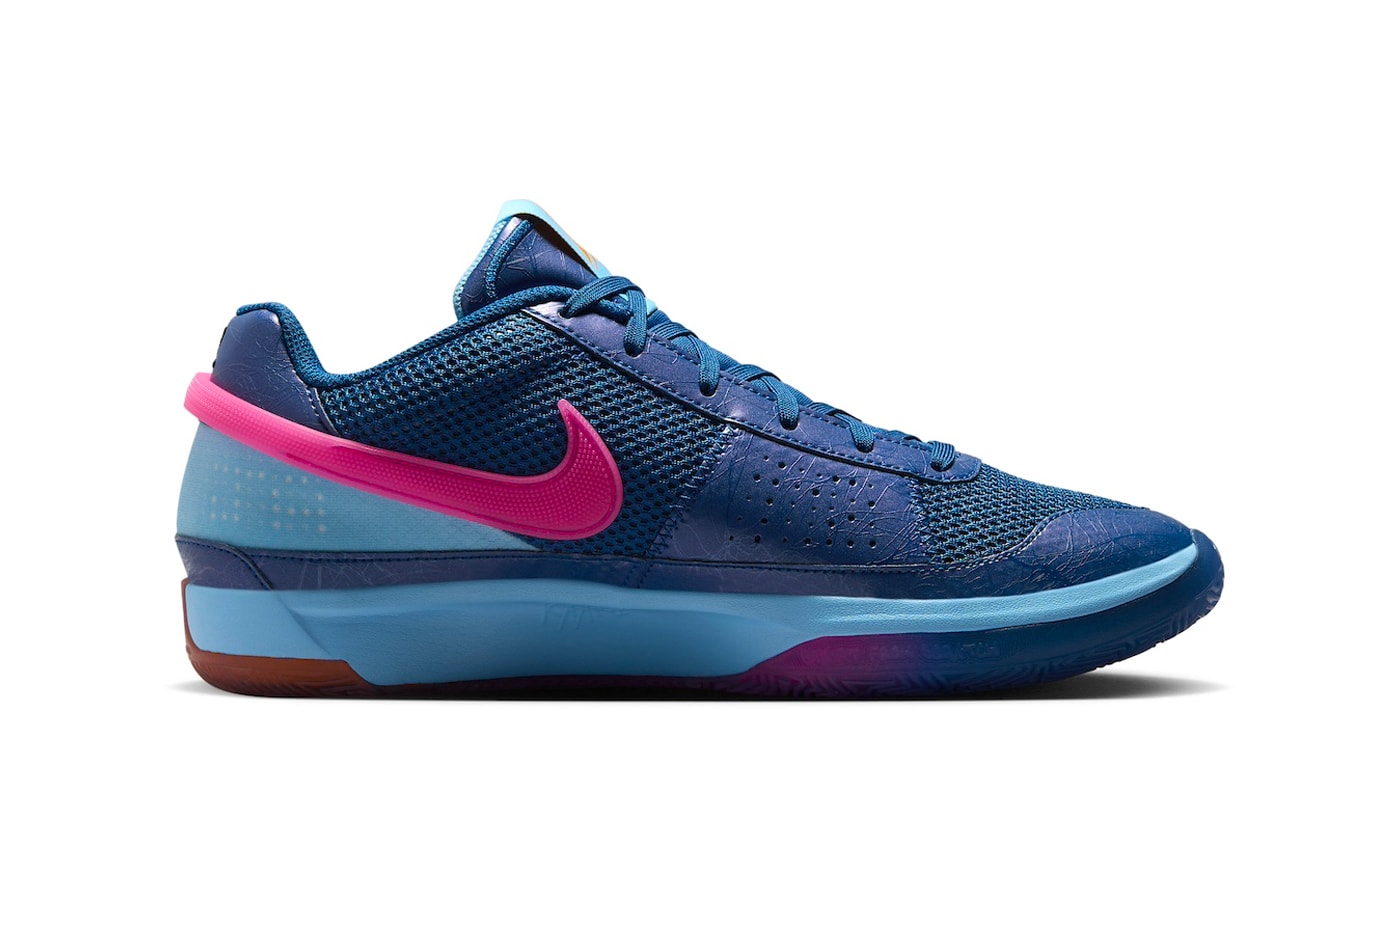 Nike Ja 1 "NY vs NY" Has an Early Summer Release Date FV1286-400 Court Blue/Hyper Pink-Aquarius Blue-Black-Bright Mandarin basketball swoosh ja morant shoes 